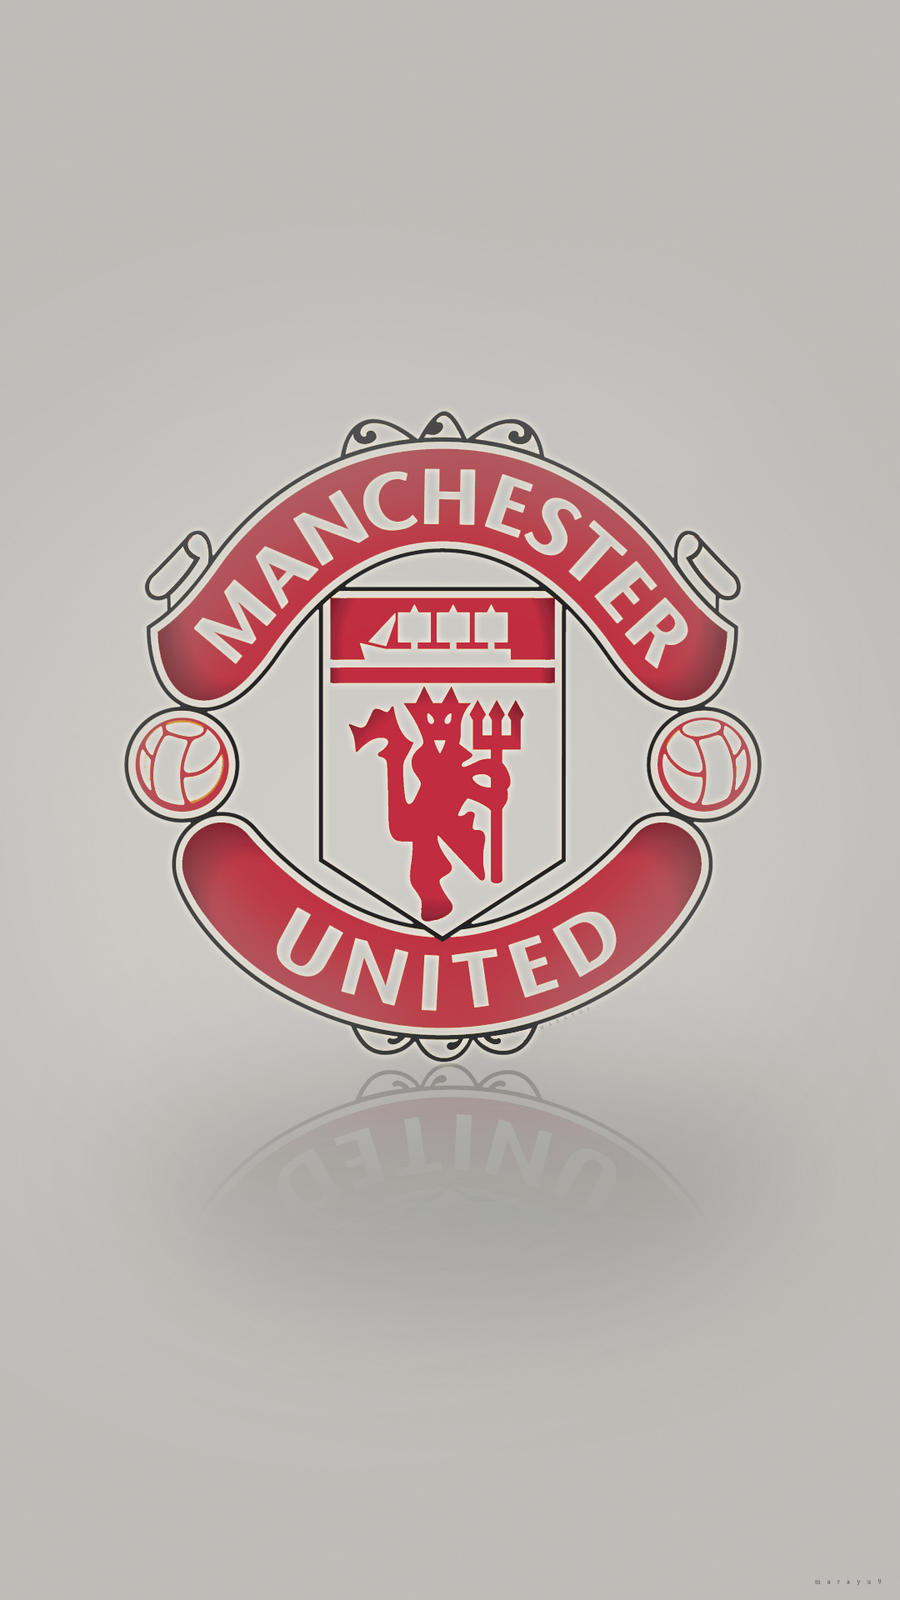 Phone Wallpaper Manchester United by MaRaYu9 on DeviantArt